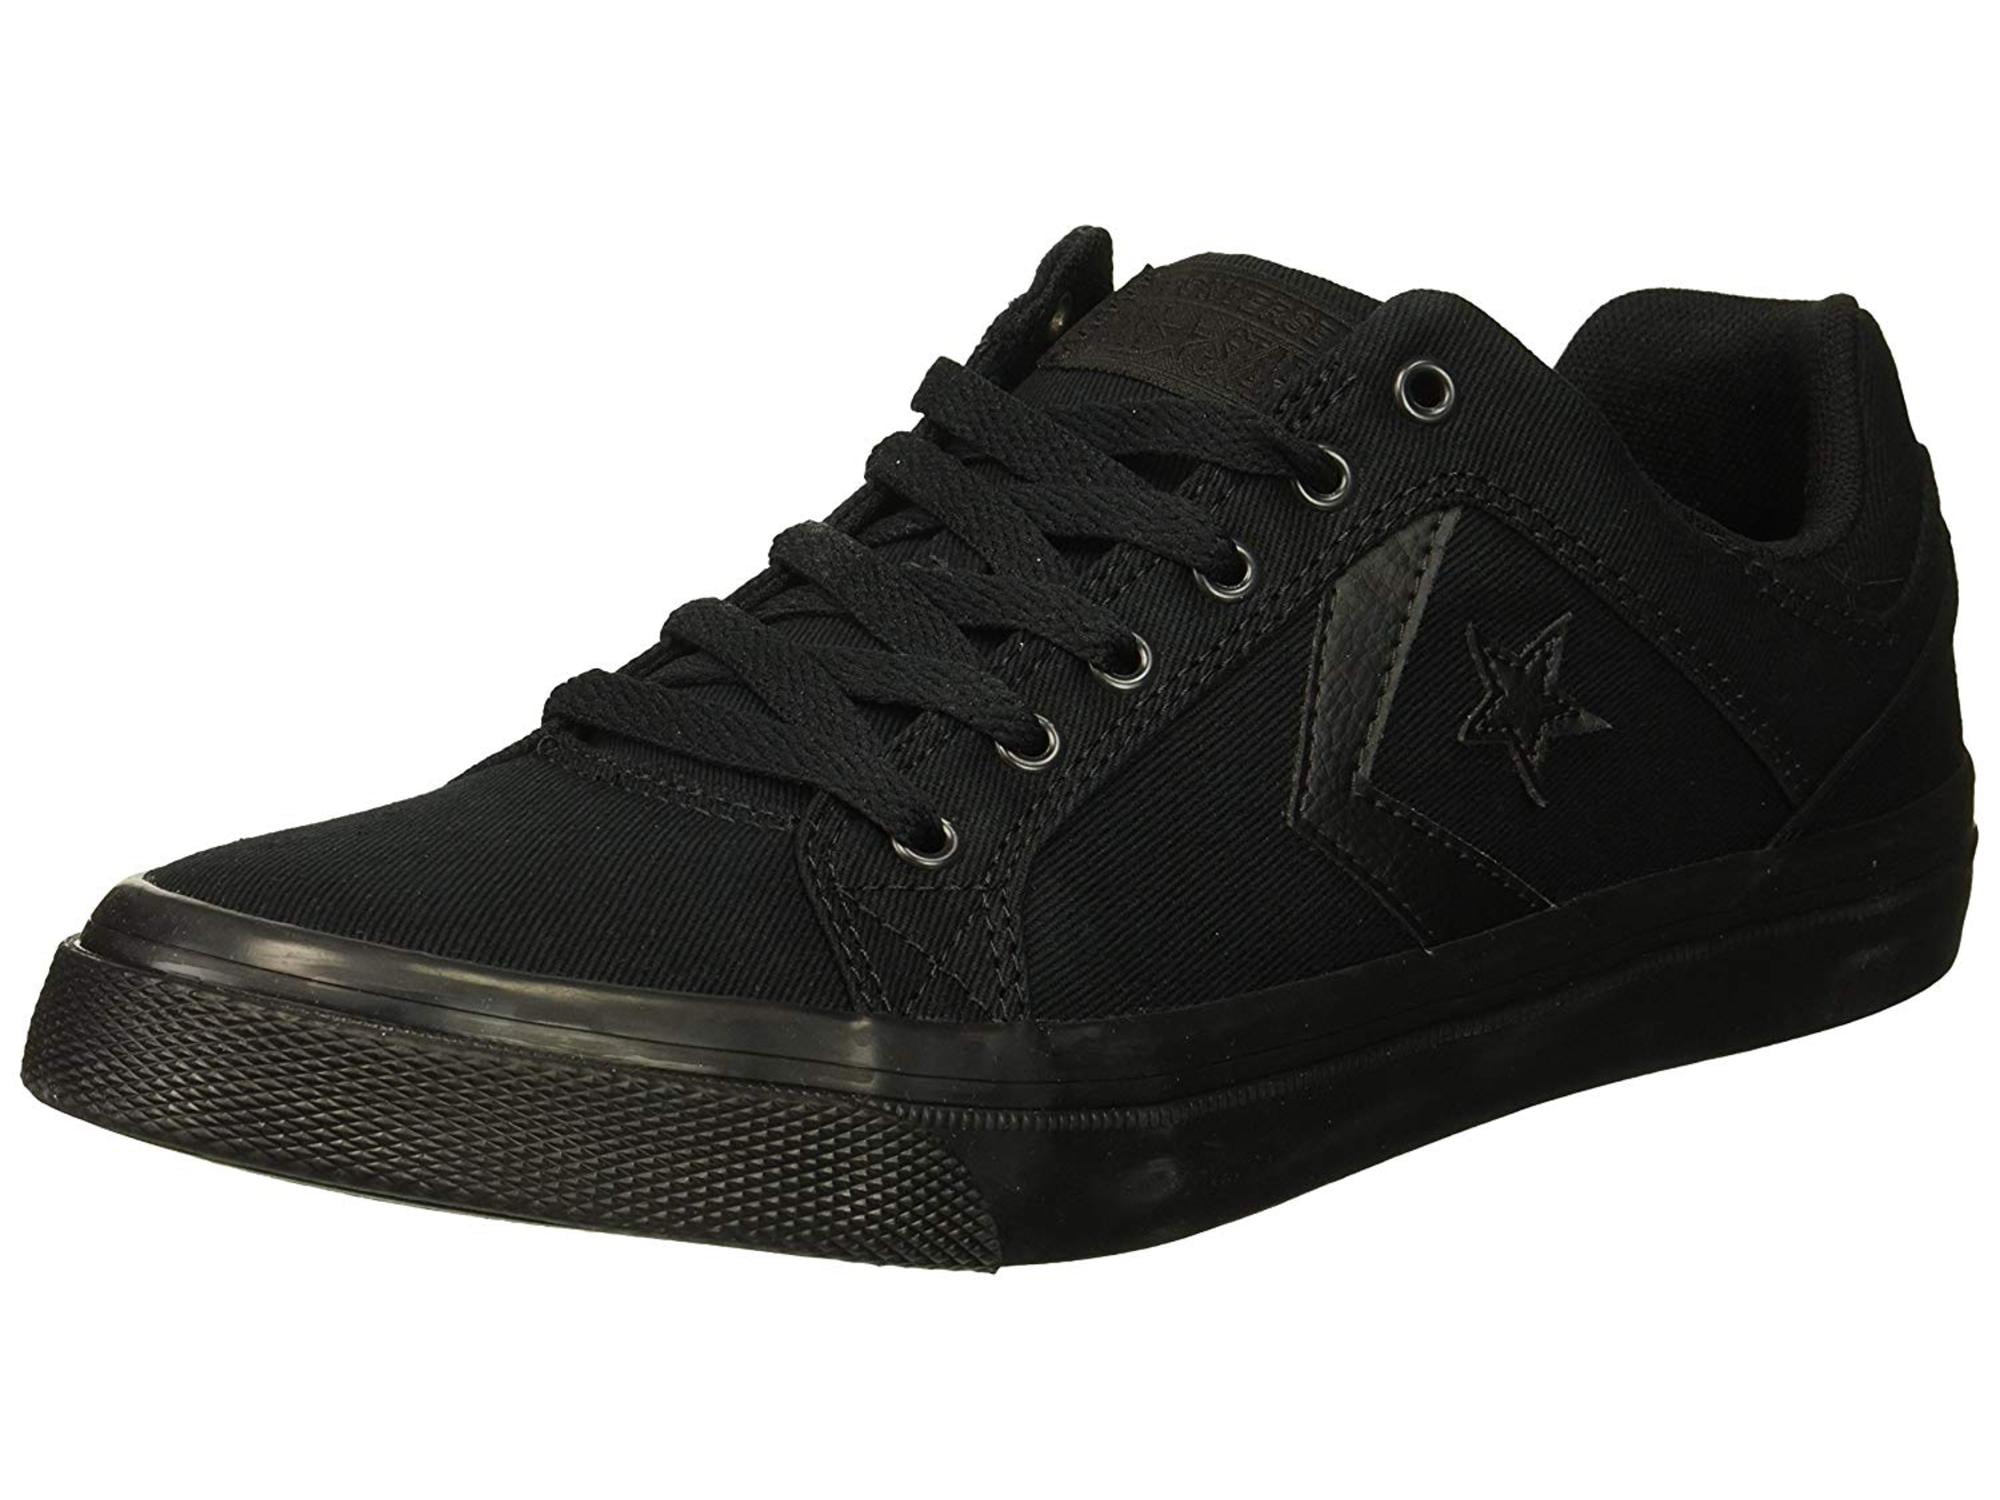 leather black converse size 5